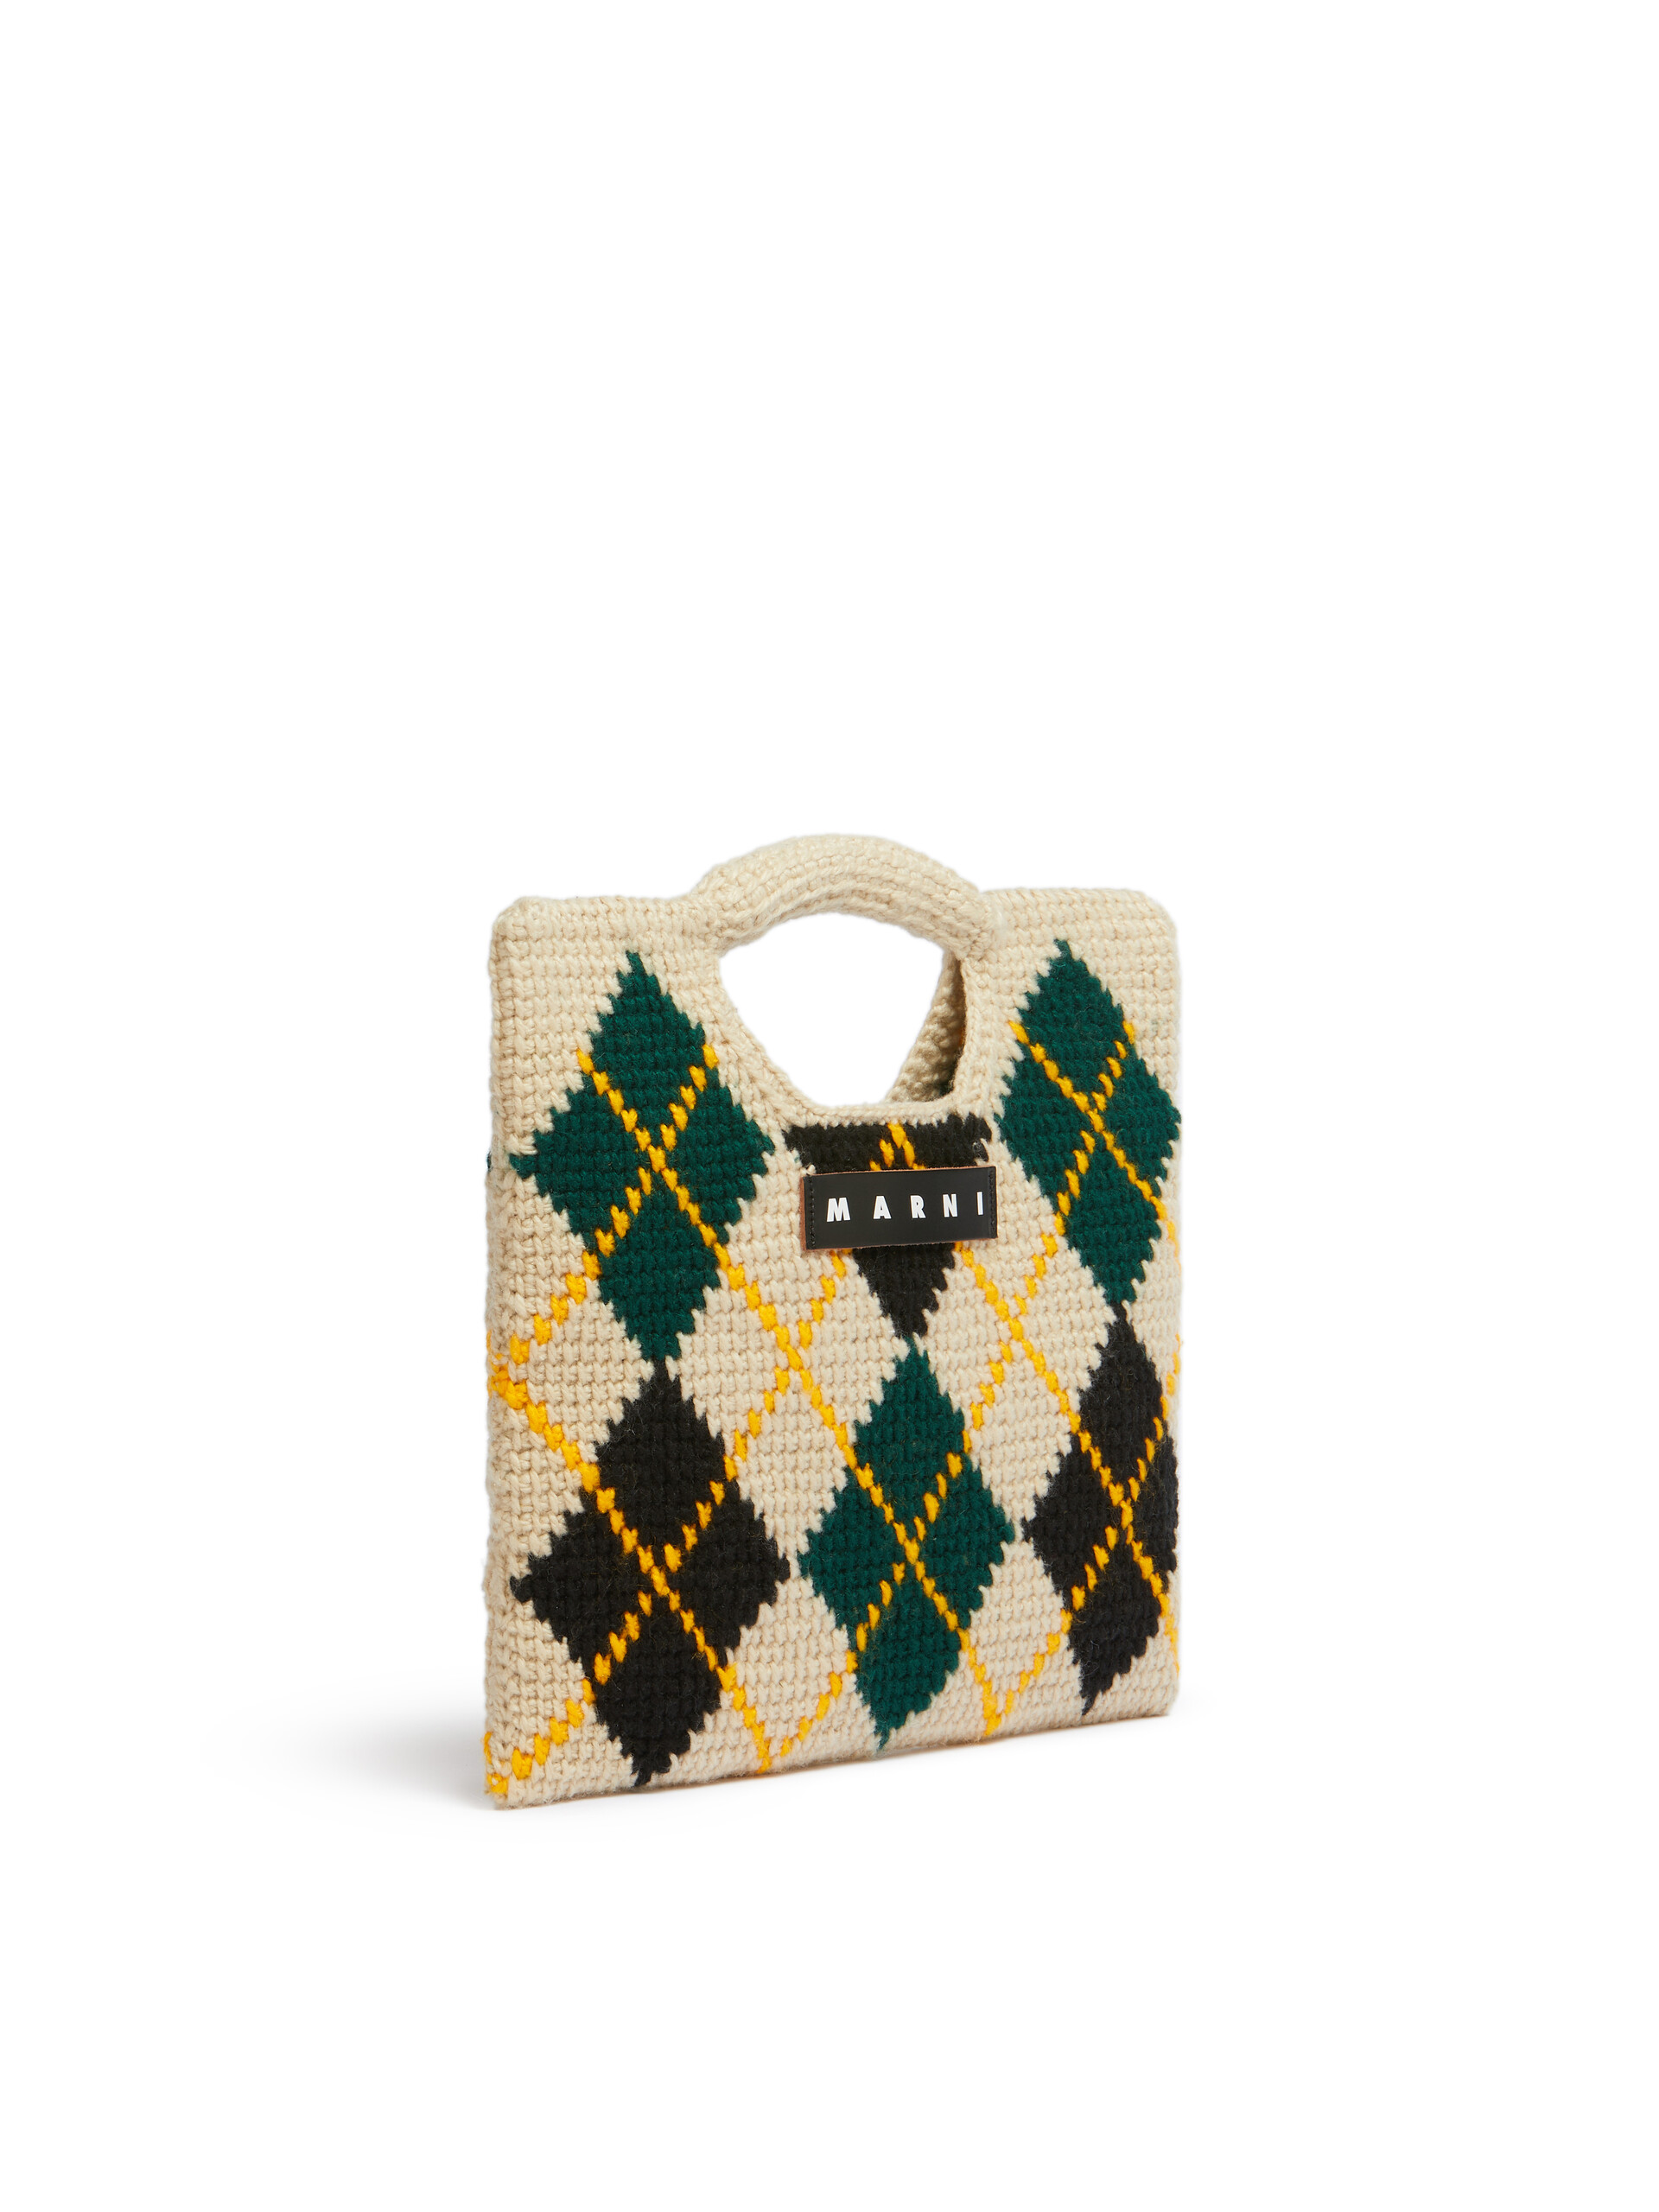 White Rhombus Tech Wool Marni Market Horse Handbag - Shopping Bags - Image 2